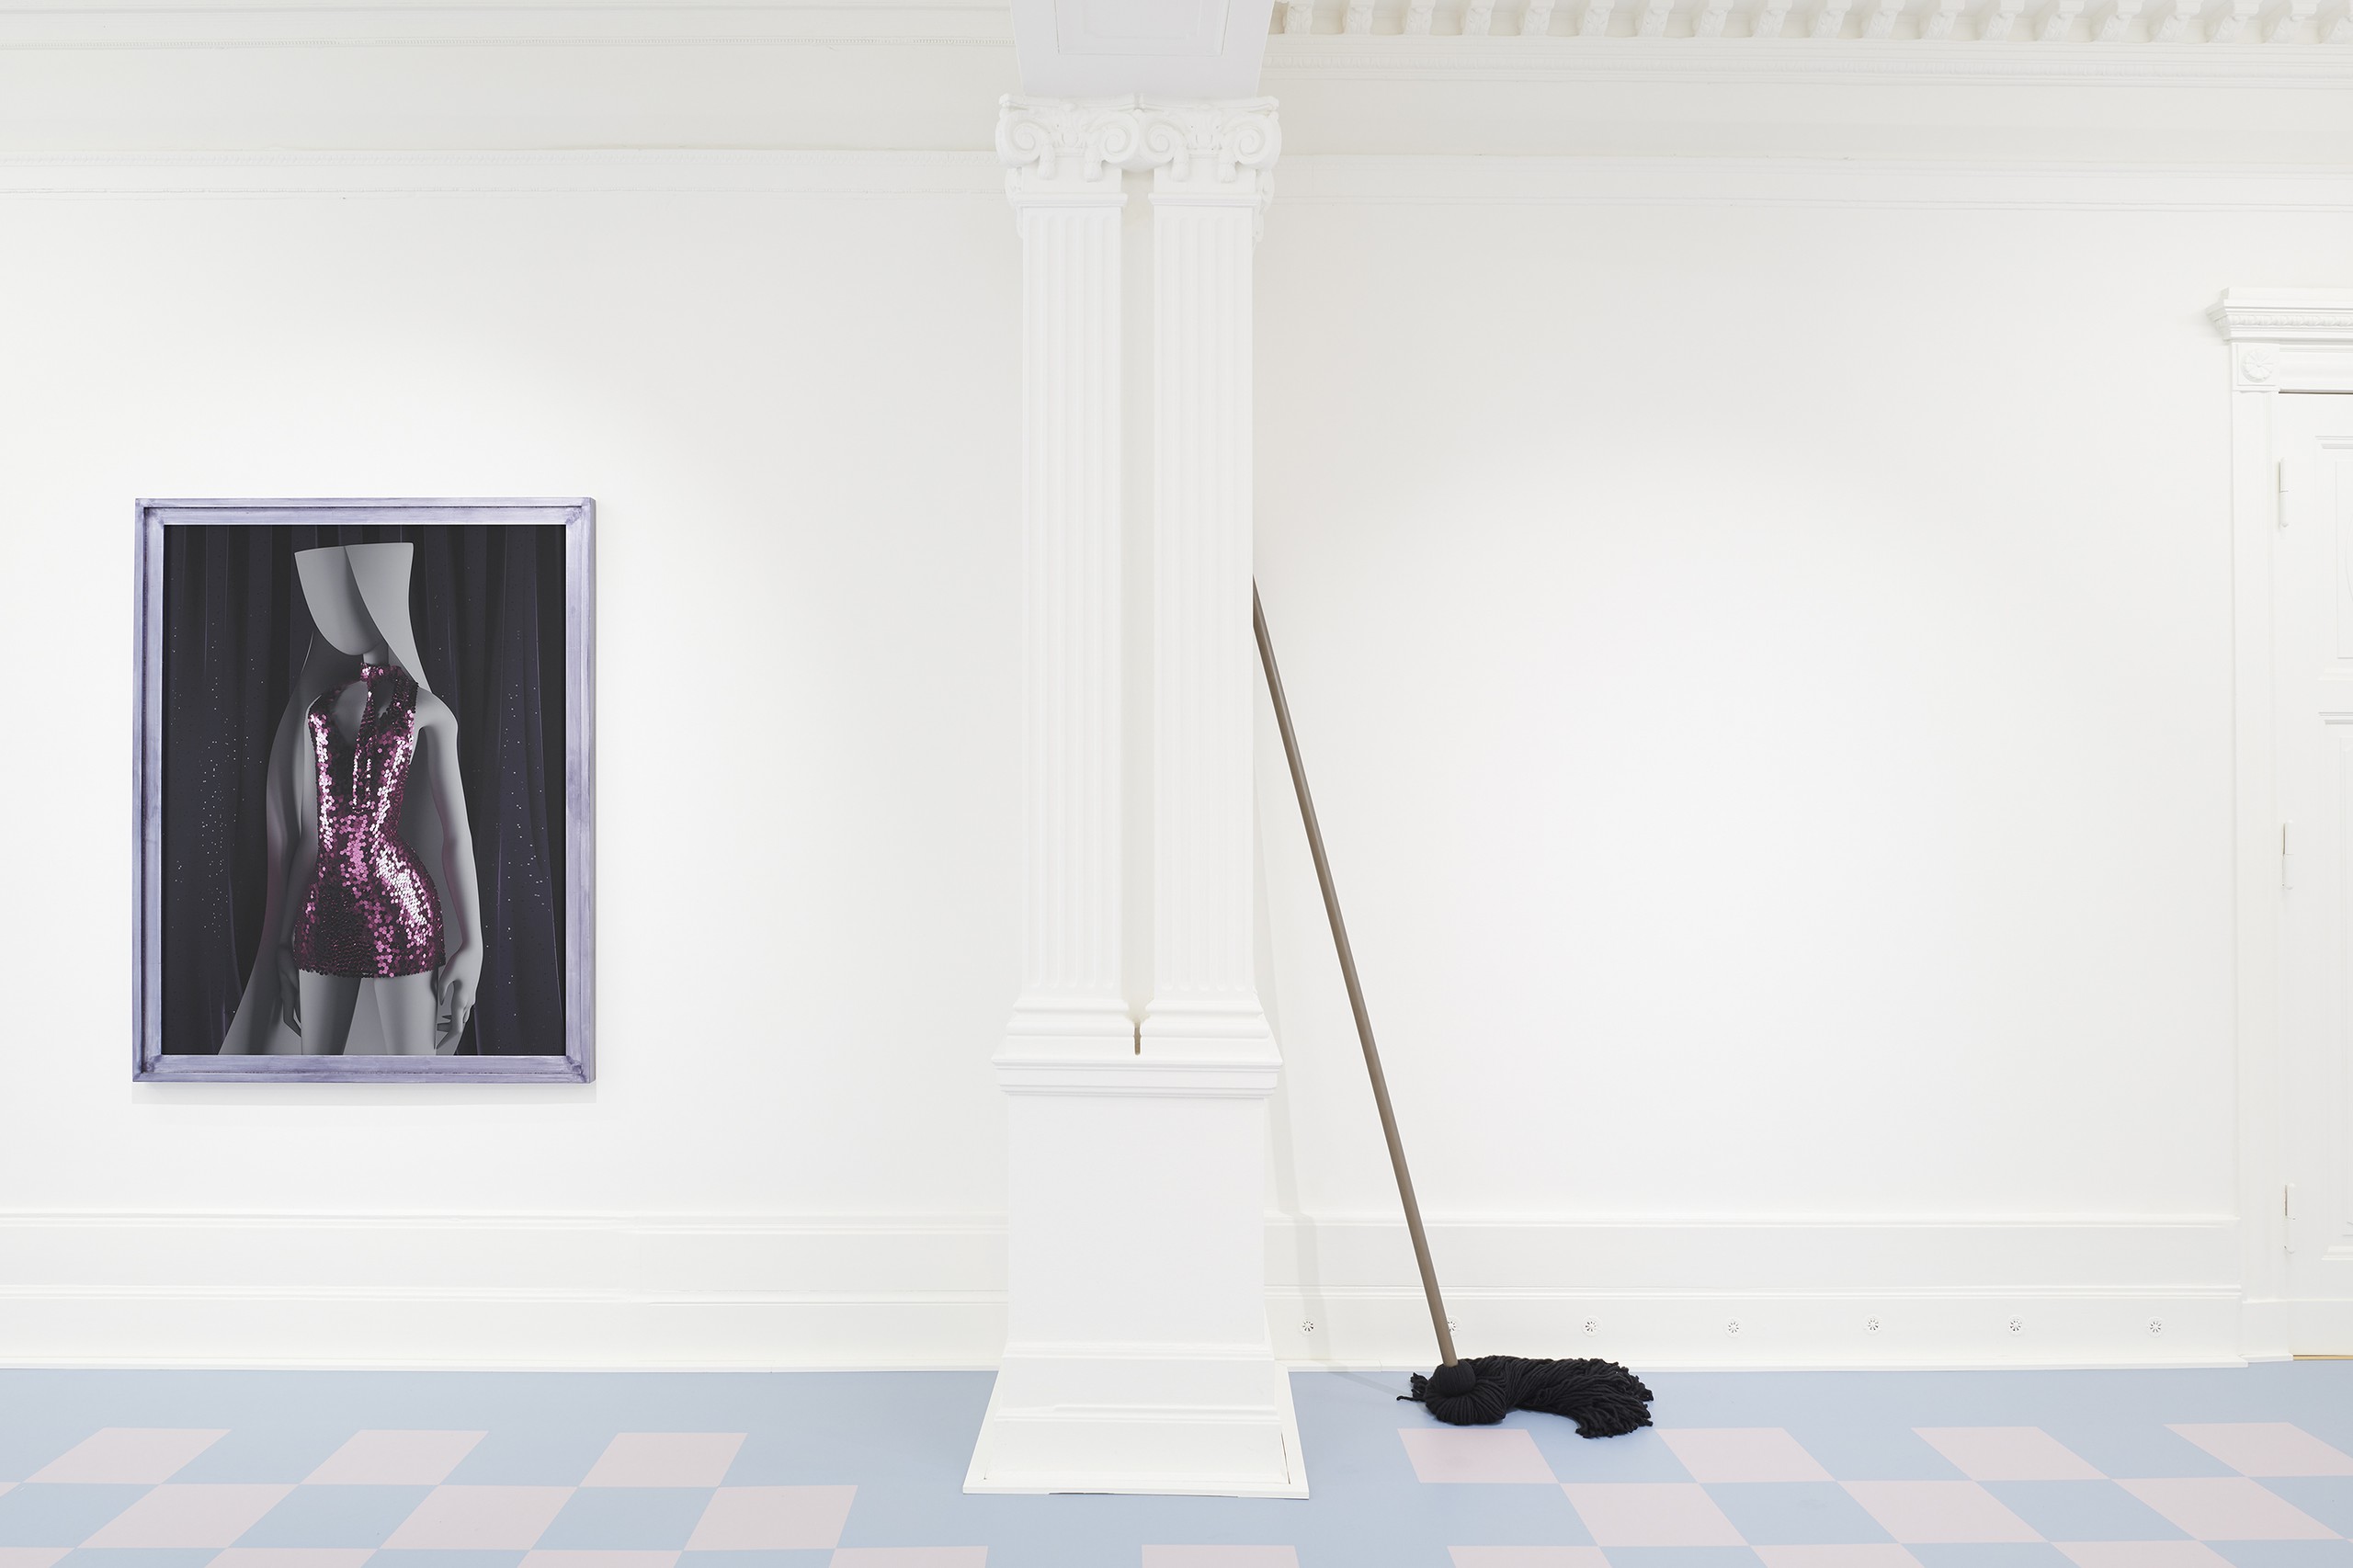 Installation view, Bunny Rogers, Ms Agony, Société, Berlin, 2020/21